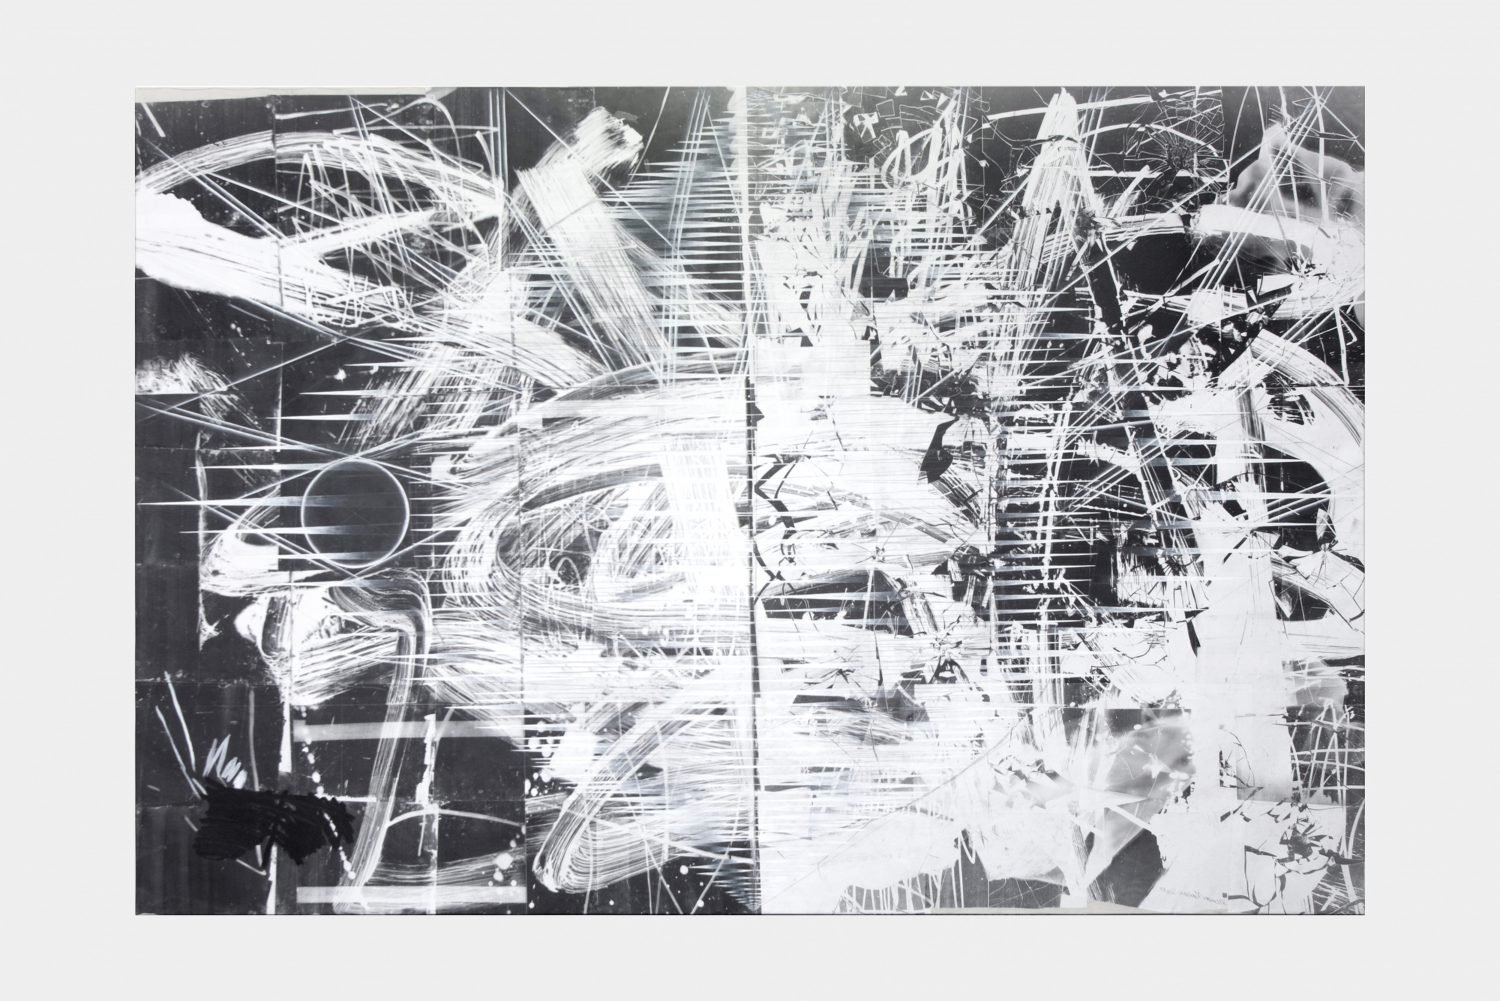 Tillman KaiserUntitled, 2017Eggtempera and photogram on paper on canvas200 x 300 cm